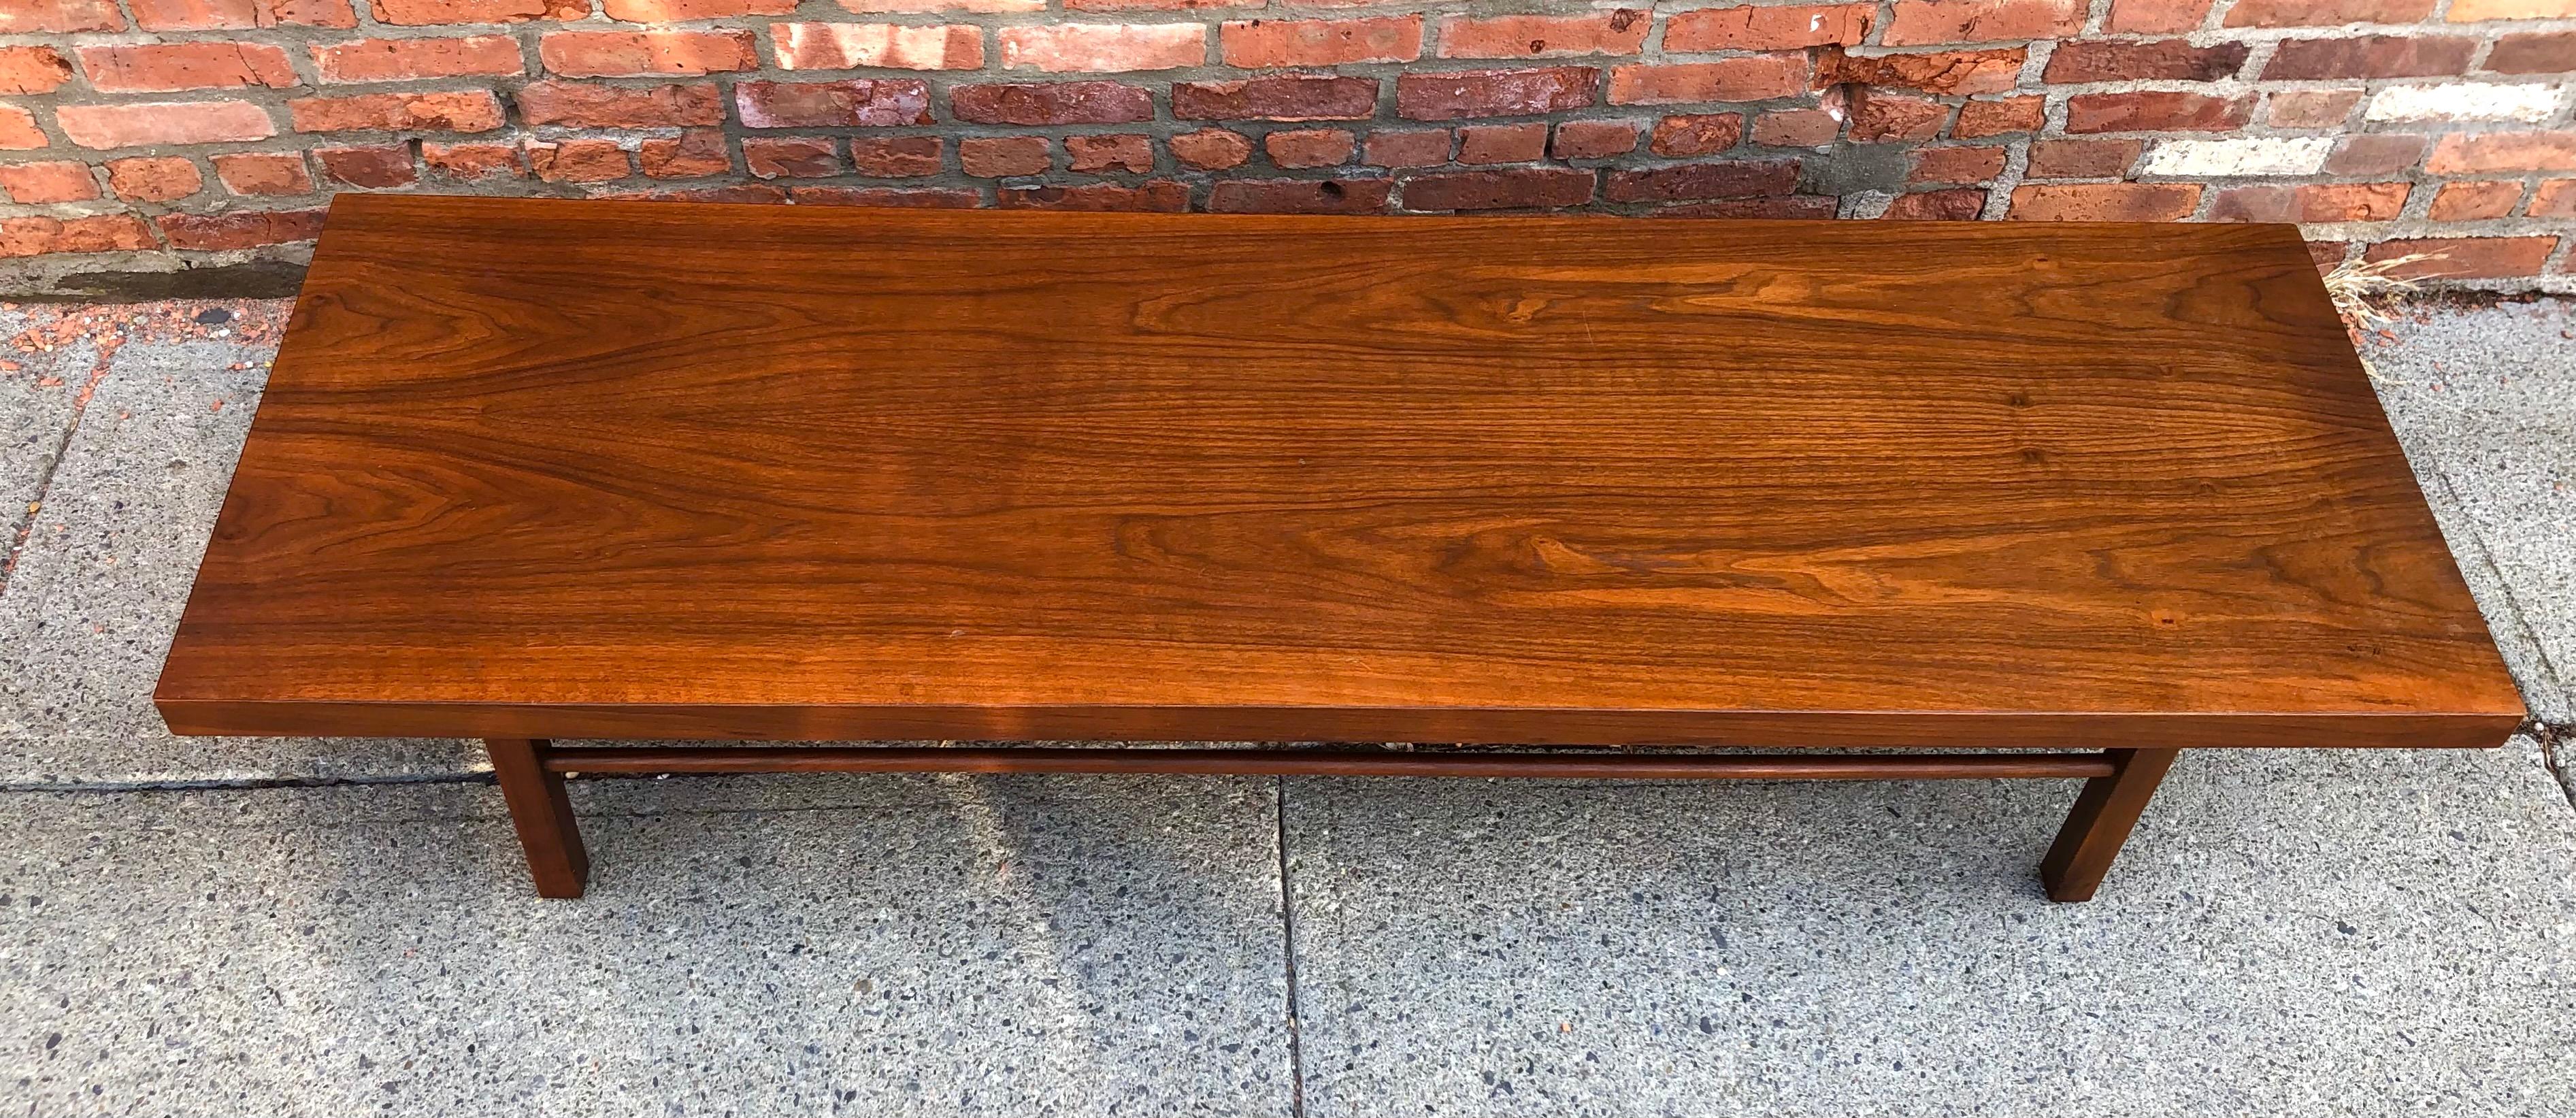 Veneer Milo Baughman Low Walnut Long Bench or Coffee Table For Sale